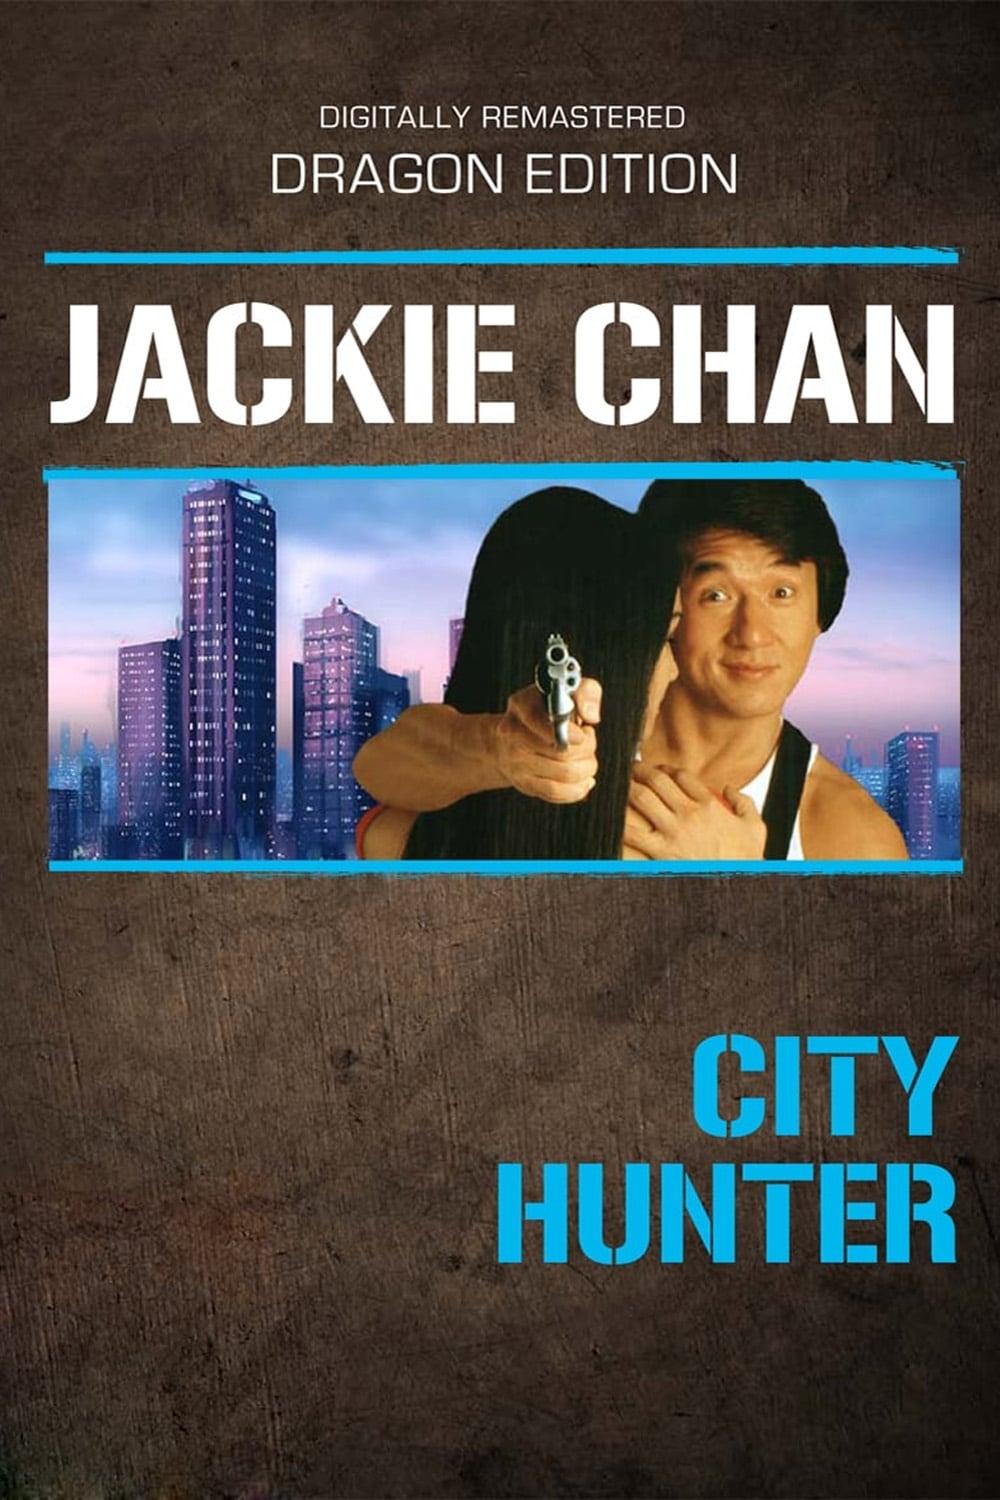 City Hunter poster